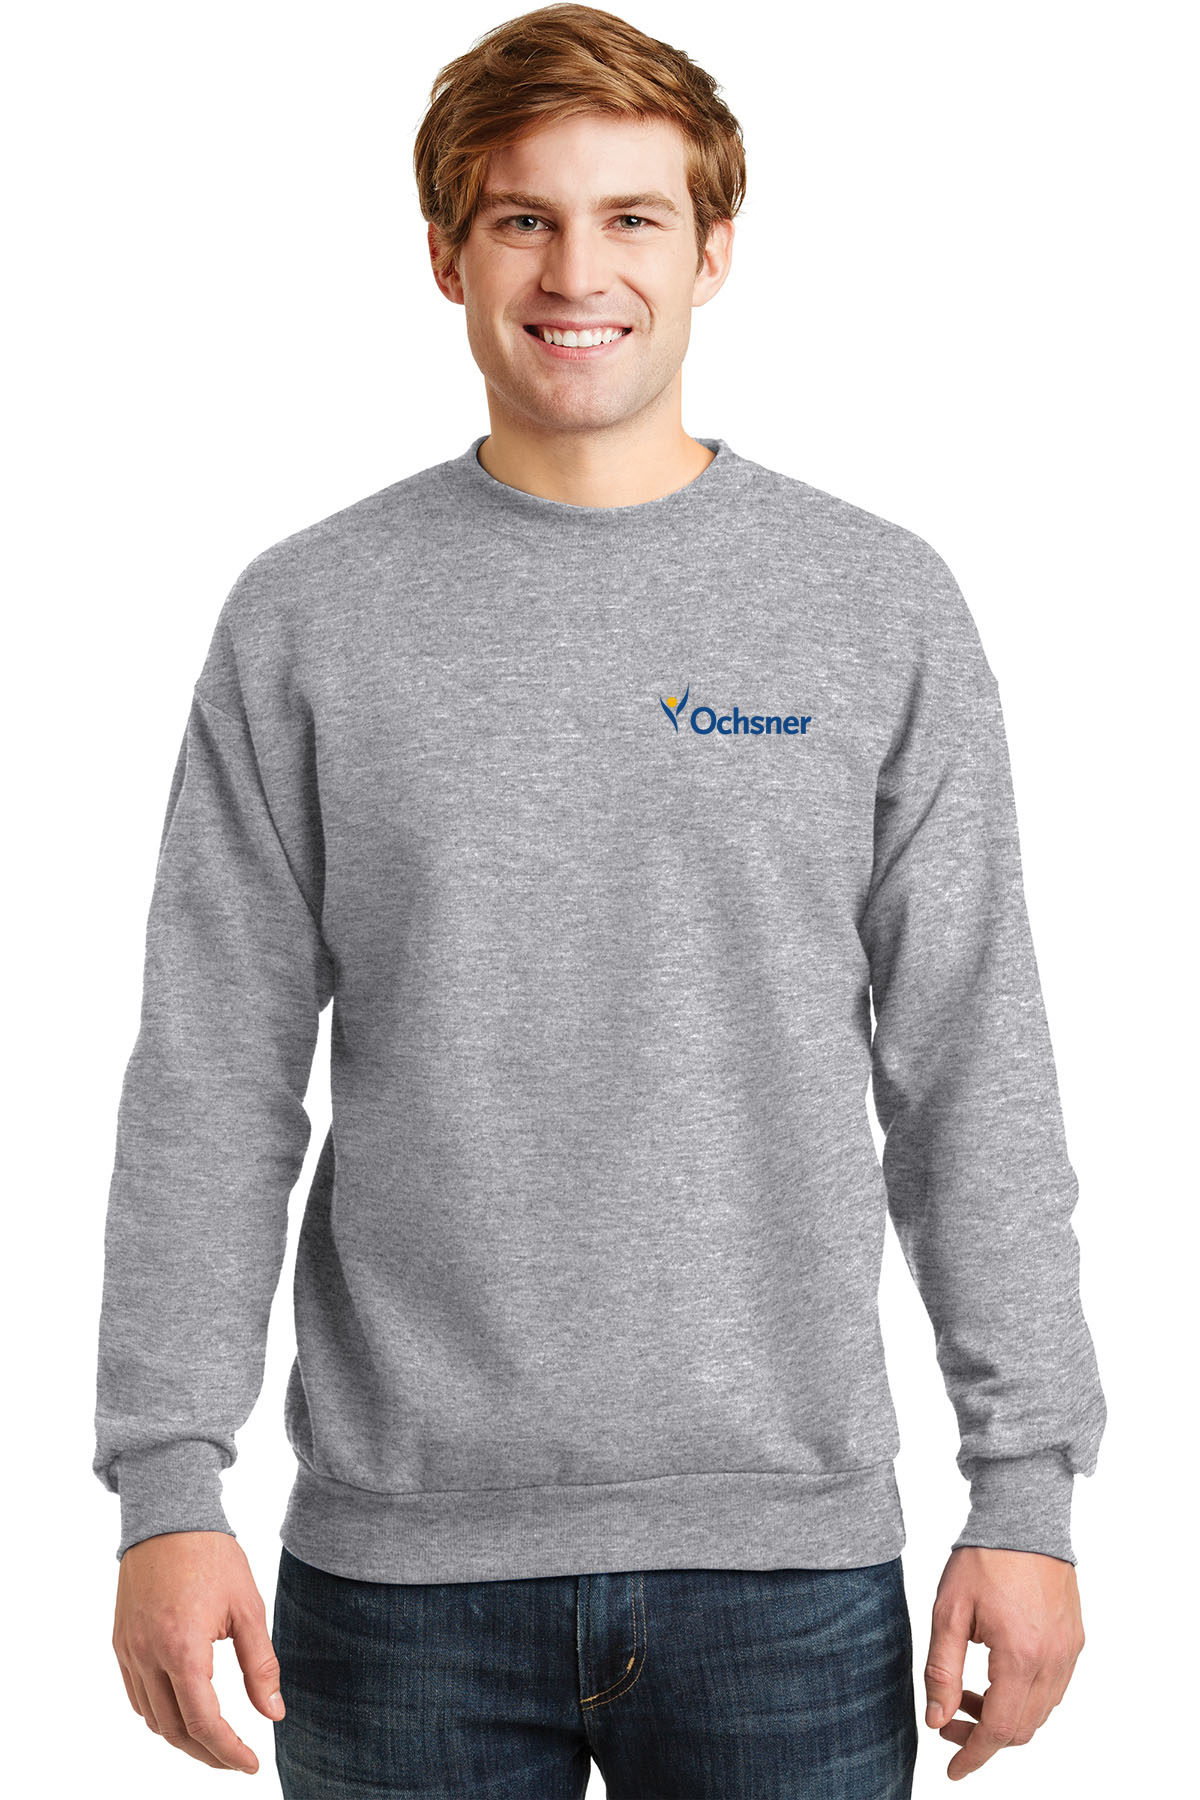 Hanes Unisex Ecosmart Sweatshirt, Light Steel, large image number 1